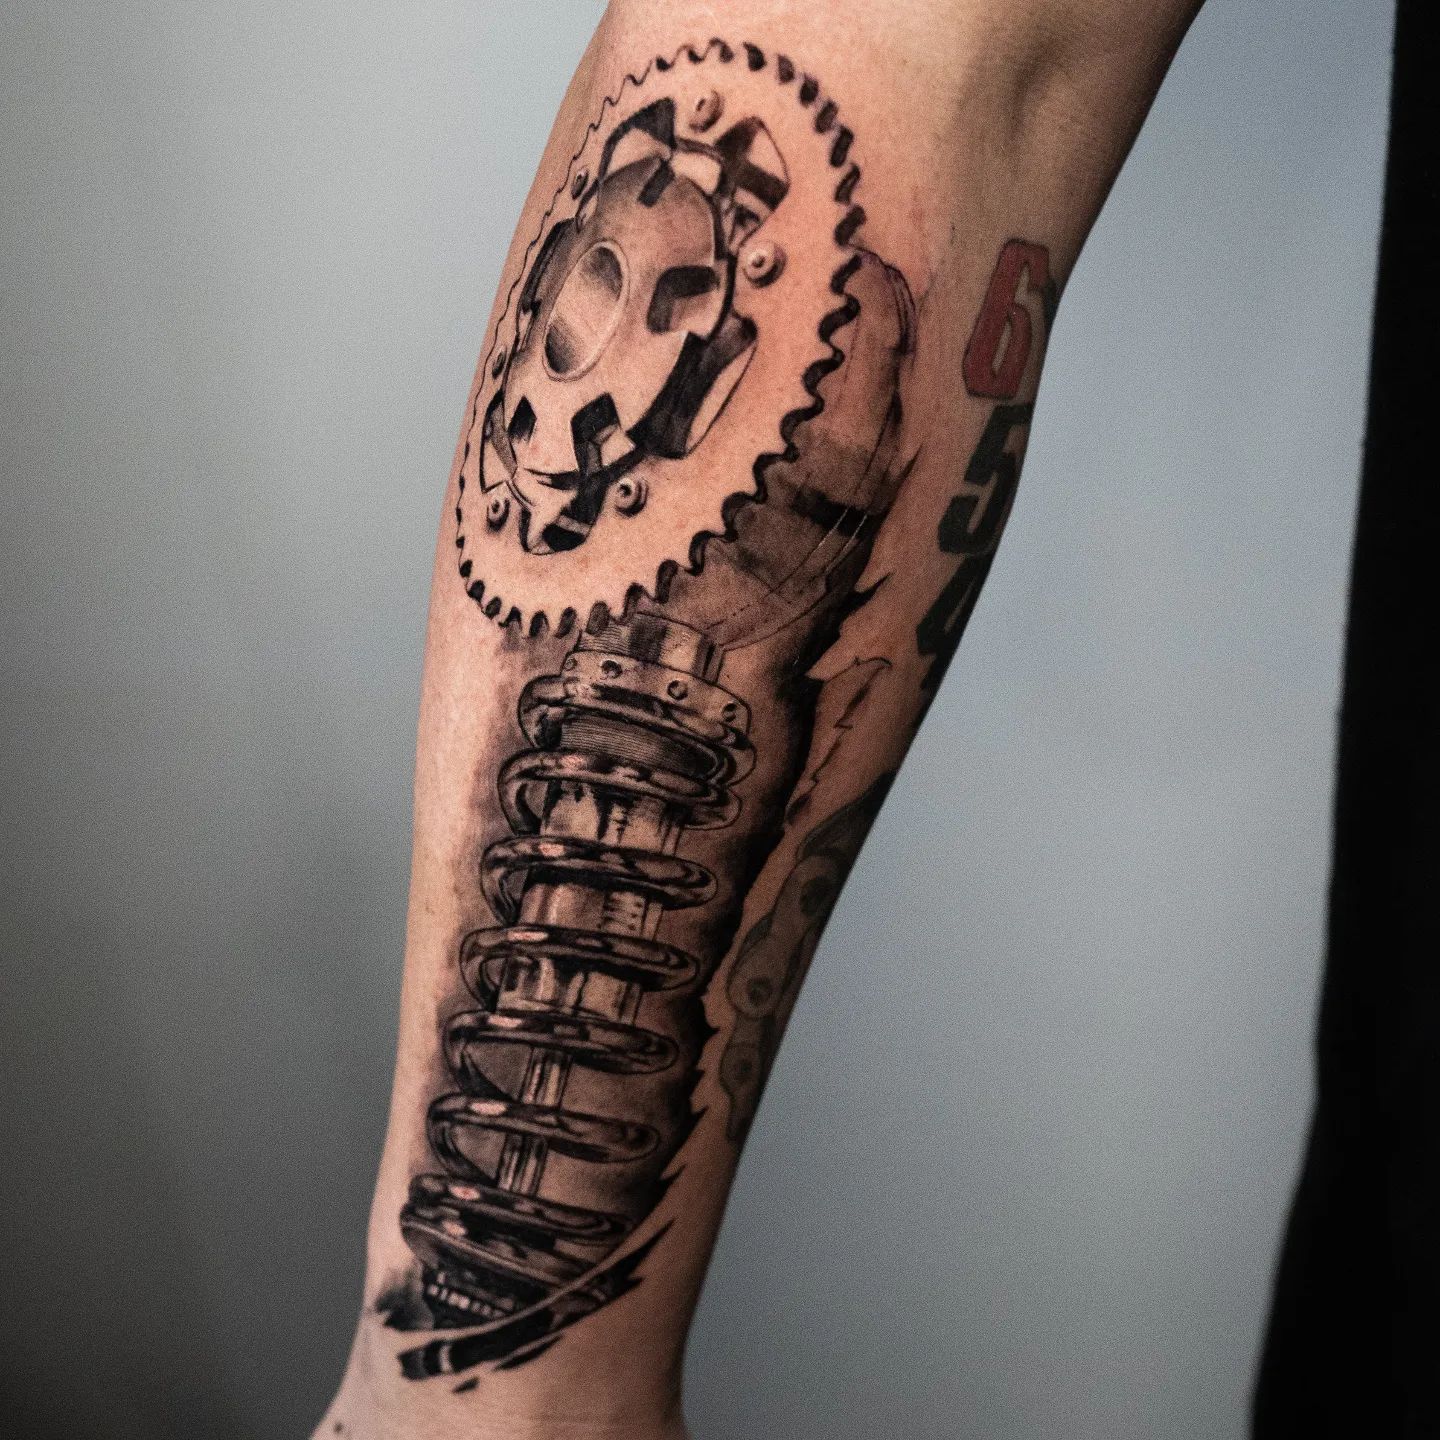 Bio-Mechanical Arm Tattoo - Black Rose Tattoo Shop